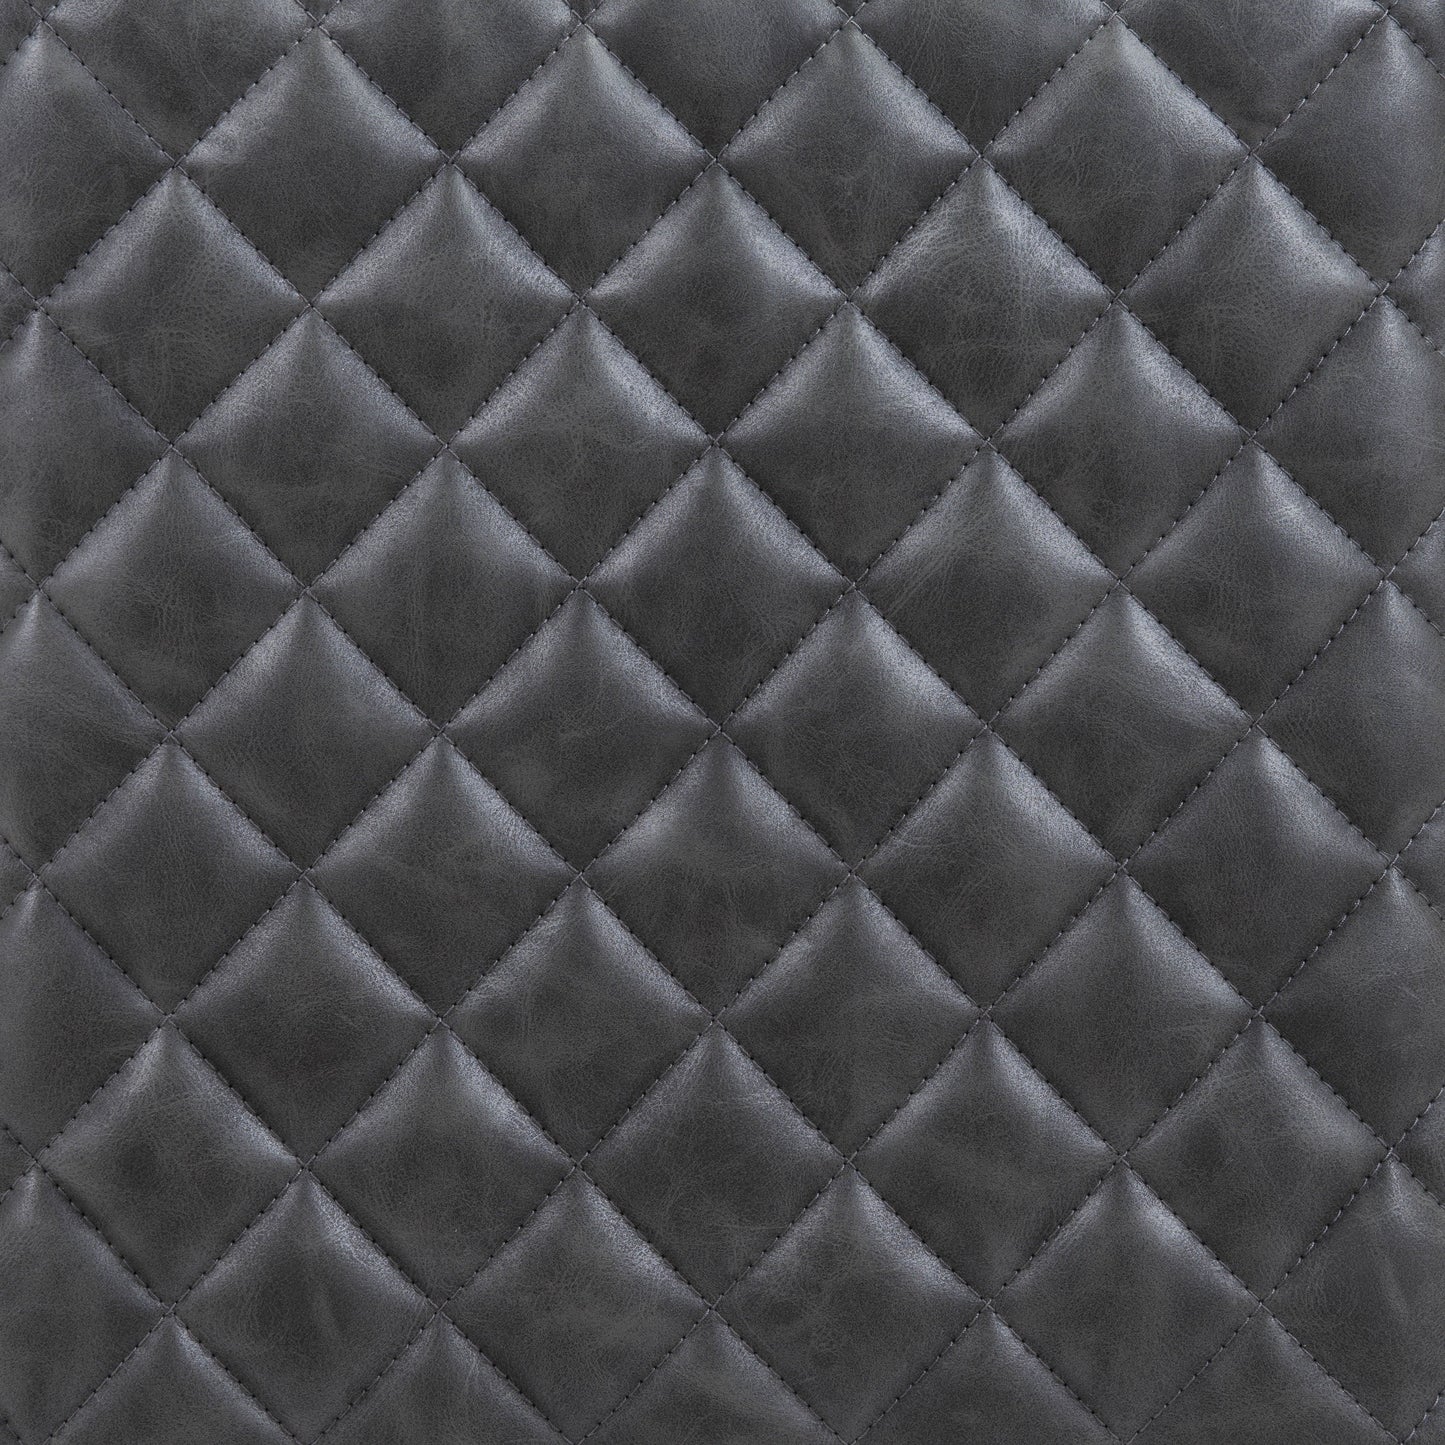 Gray Faux Leather 100% Polyurethane Seat